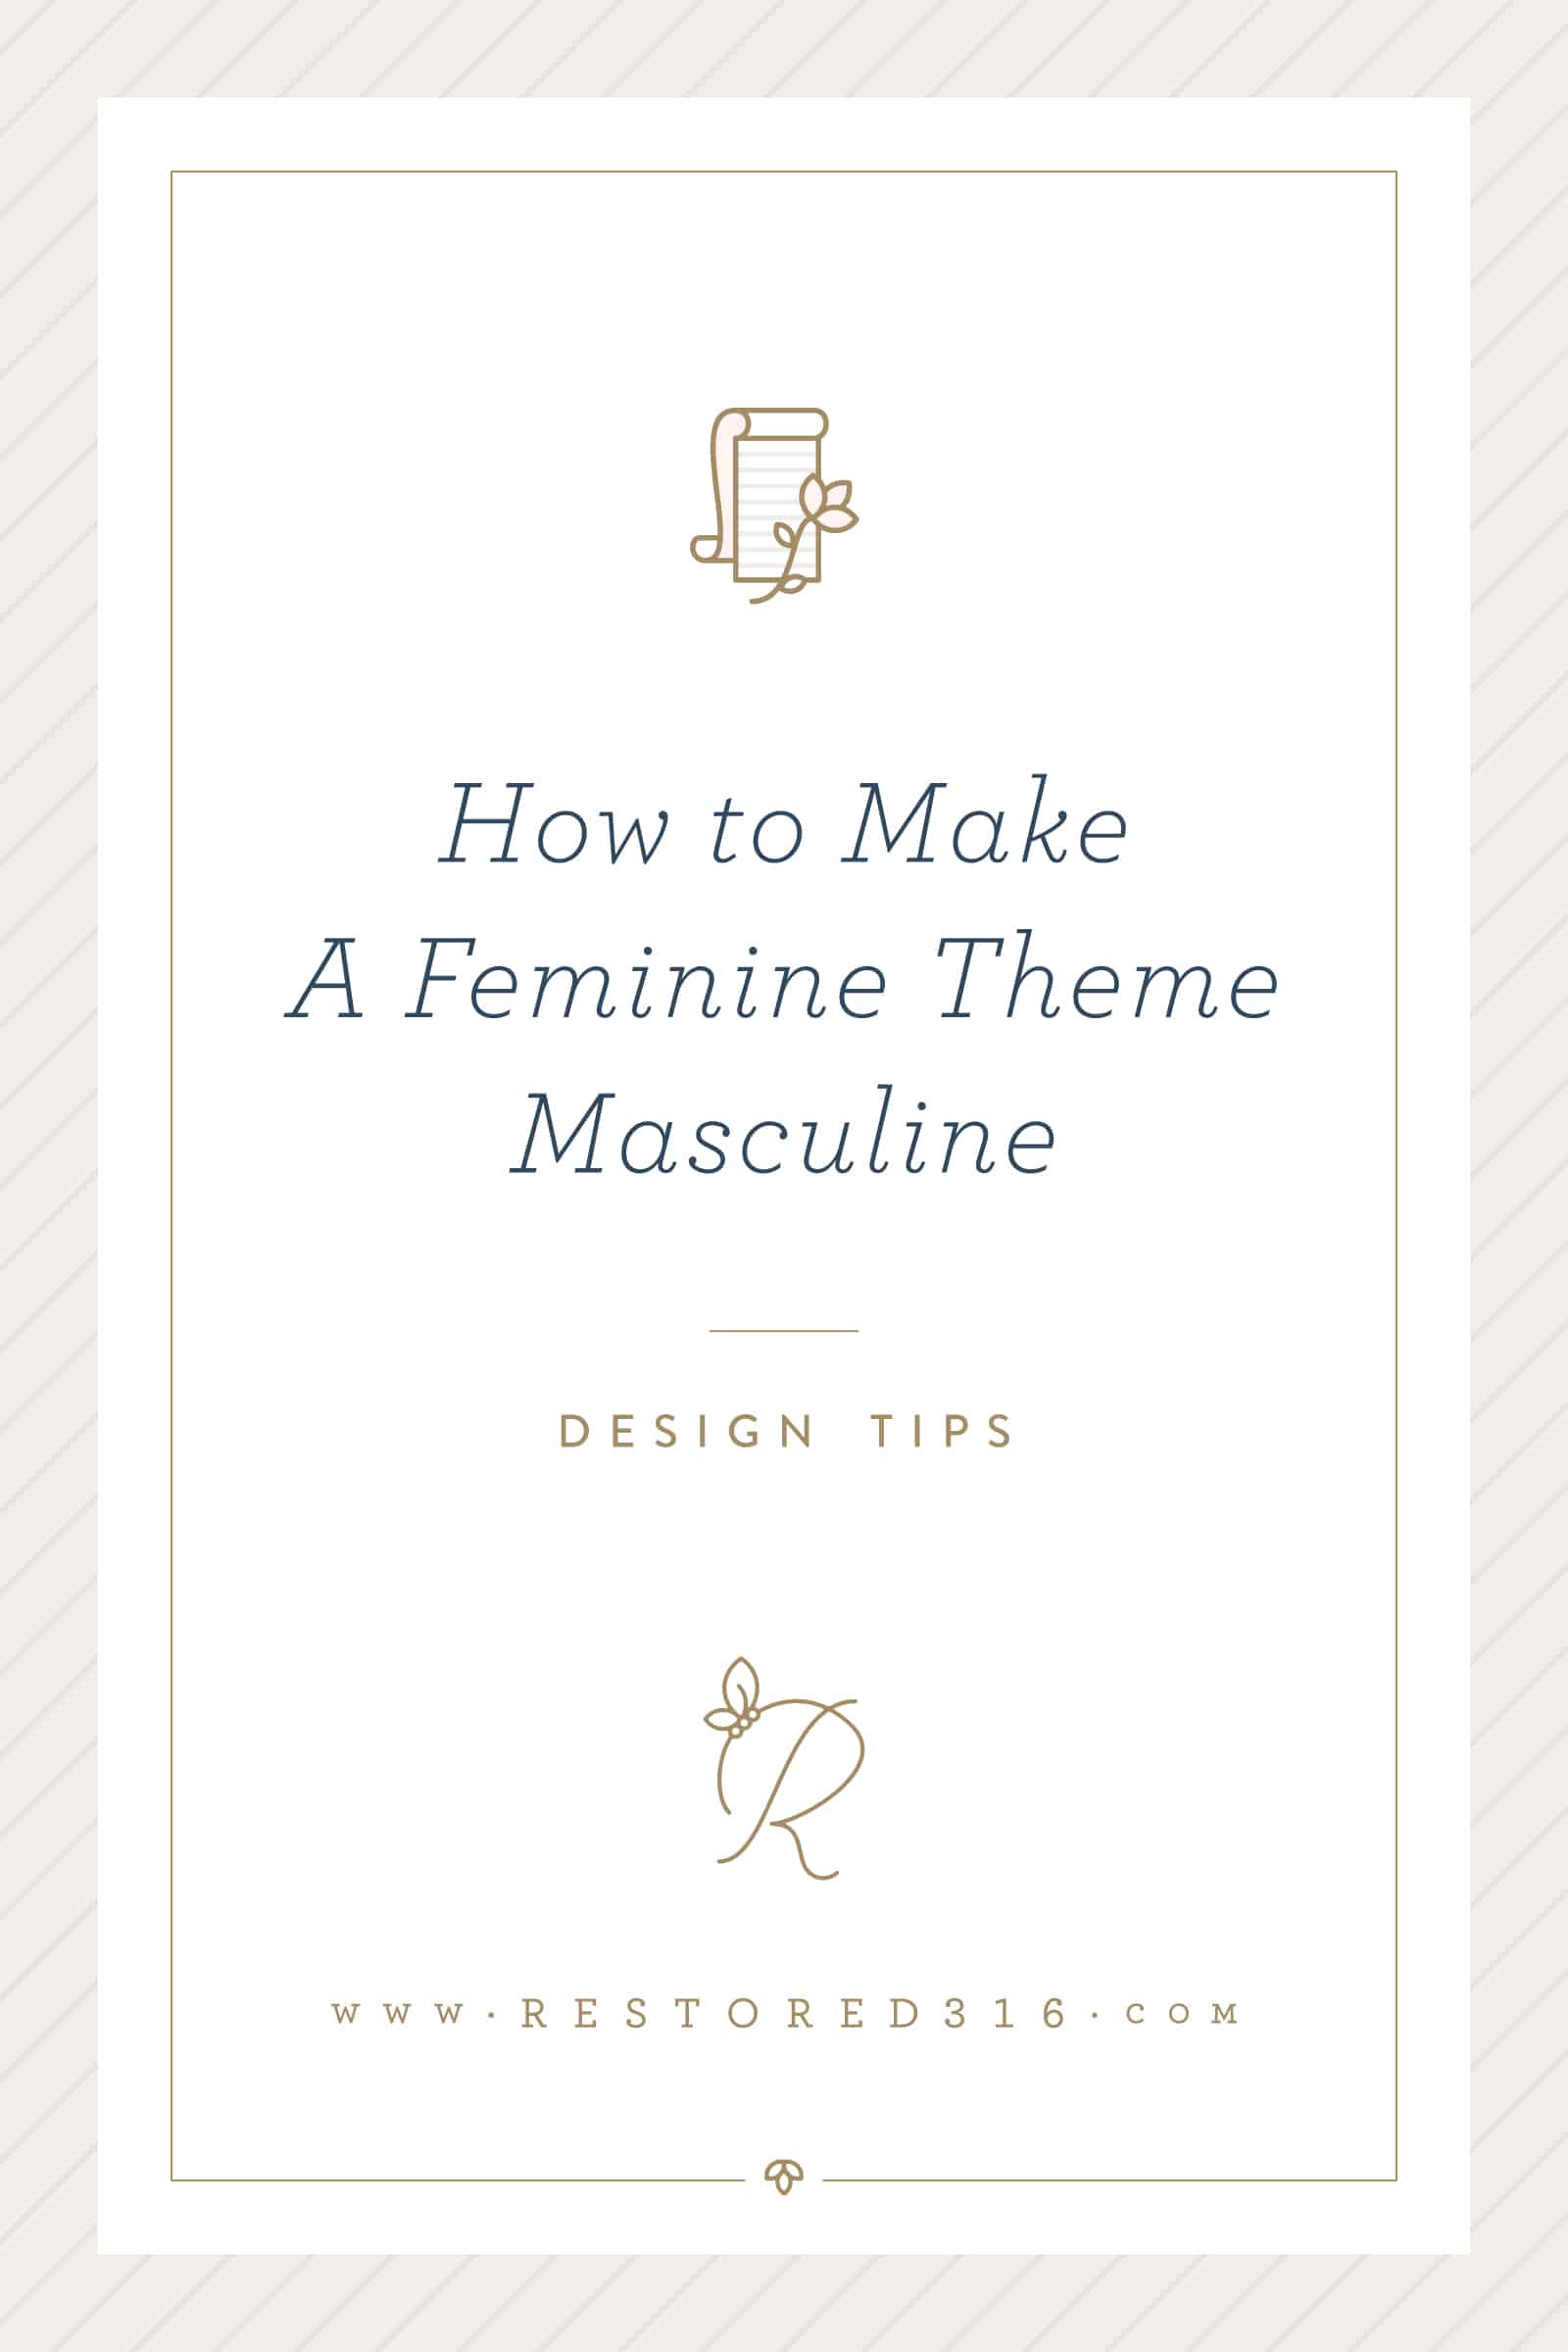 How to Make a Feminine WordPress Theme More Masculine